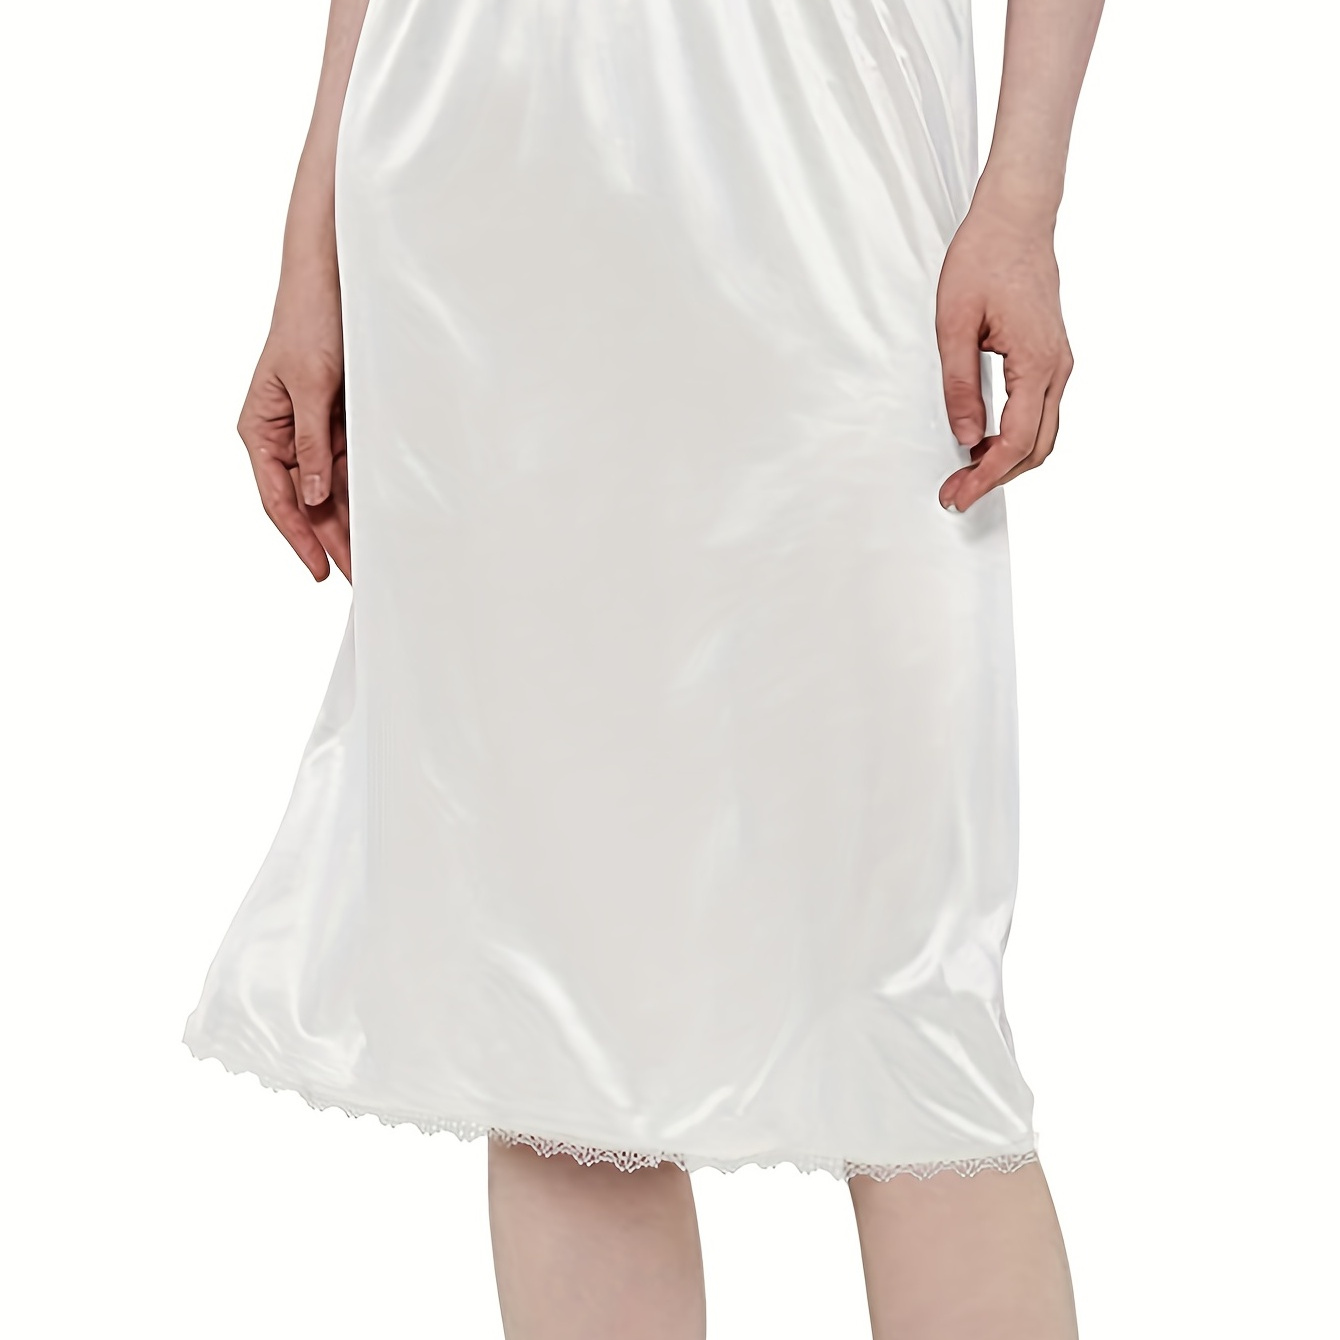 

Lace Trim Solid Skirt, Sexy Mid Rise Stretch Half Slips Petticoat, Women's Underwear & Shapewear